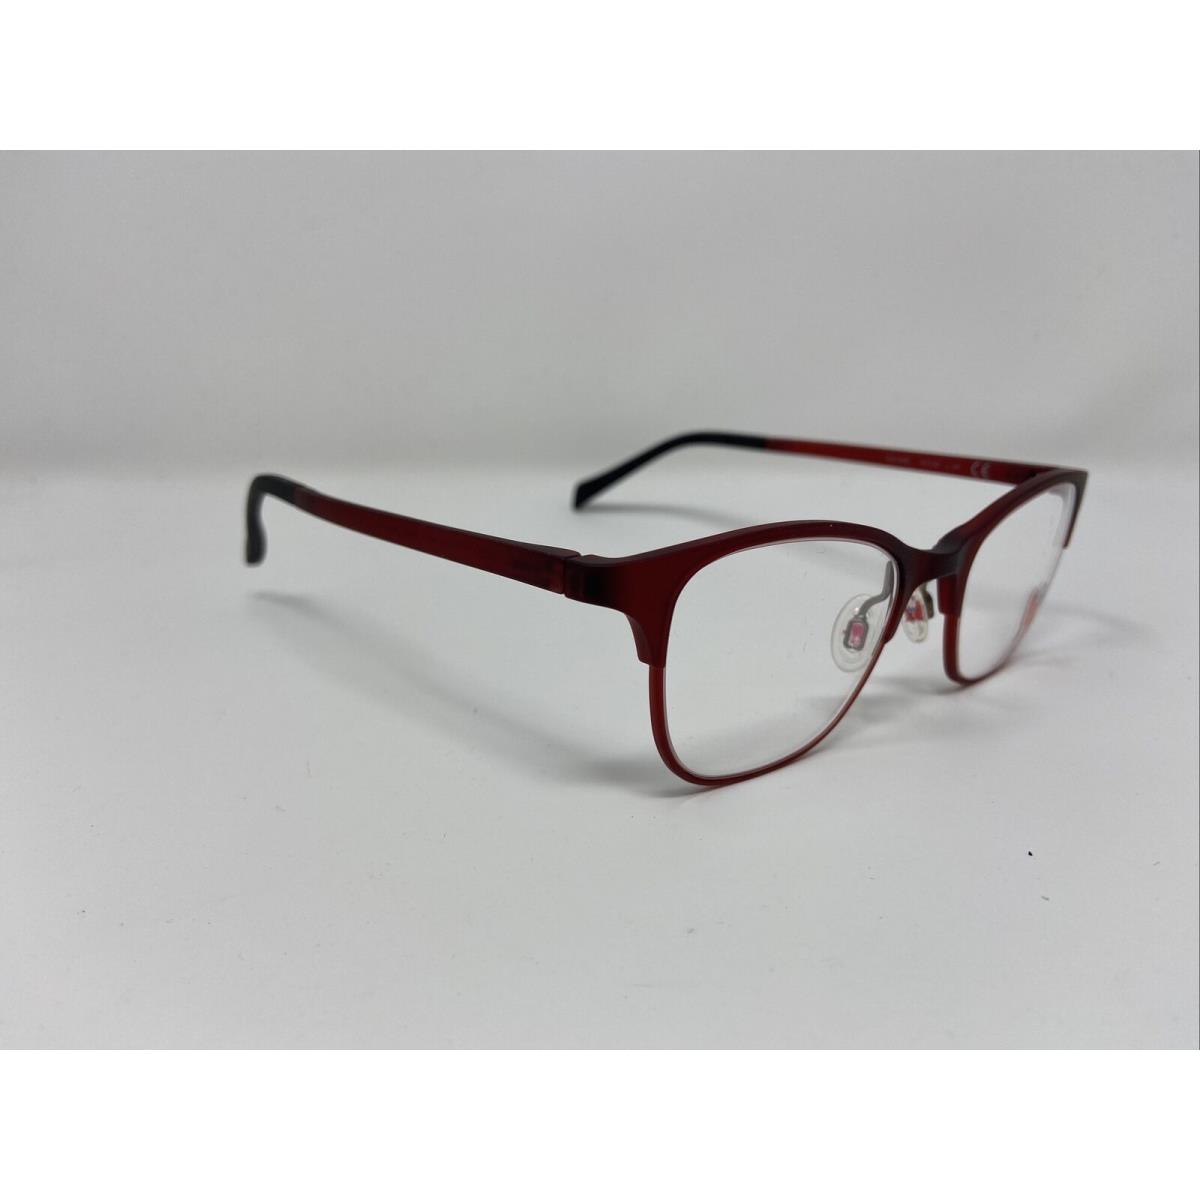 Maui Jim eyeglasses  - Red Frame 2